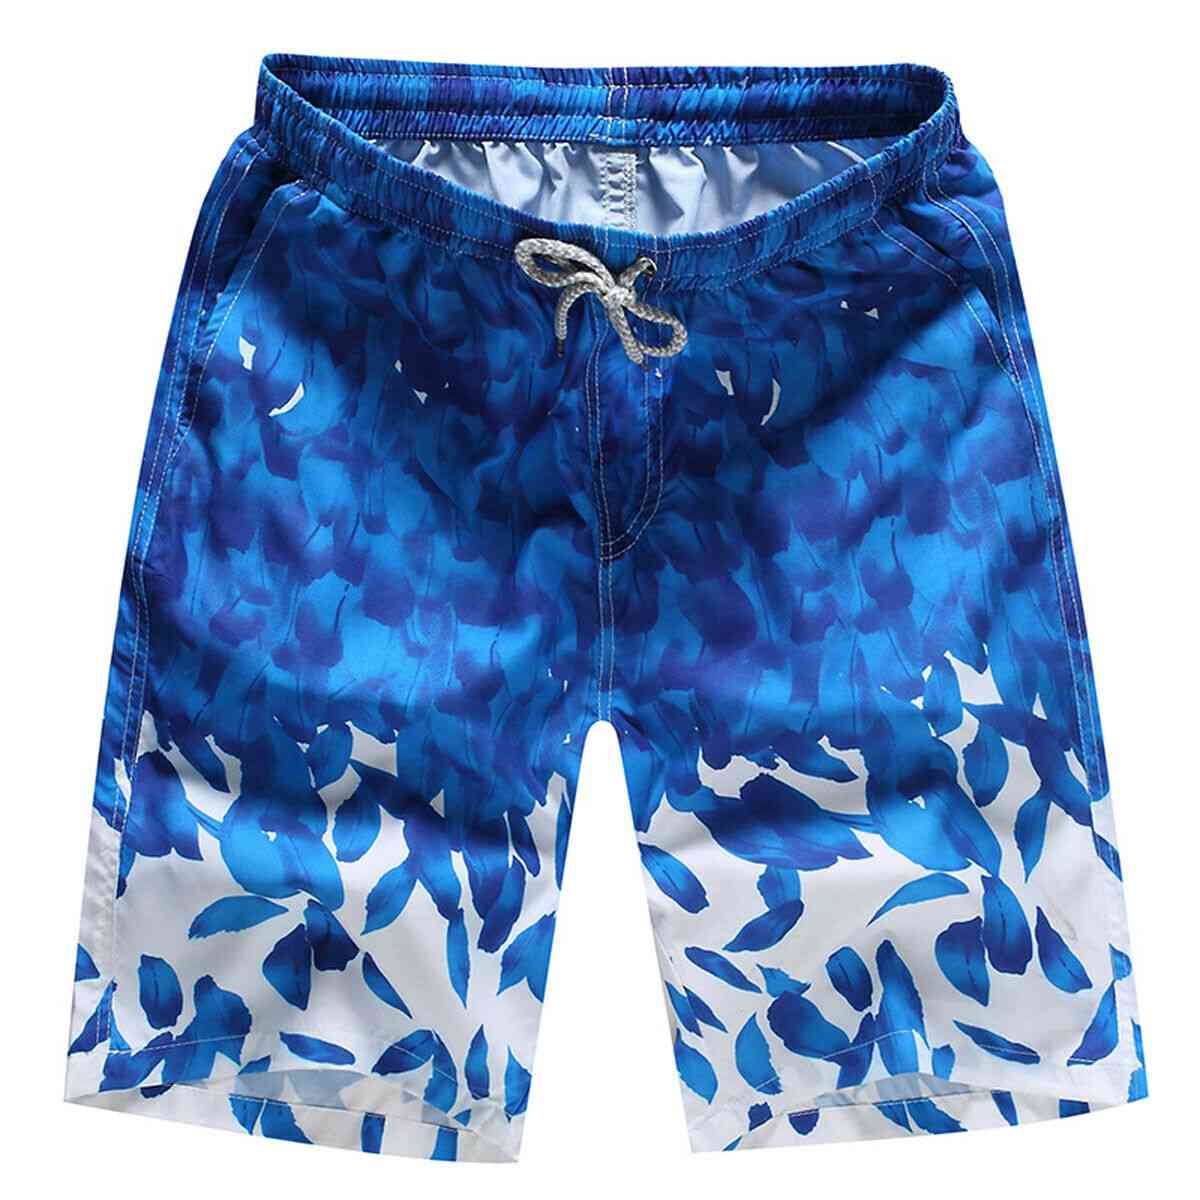 Men's Swim Trunks Beach Shorts, Summer Sports Pants Breathable